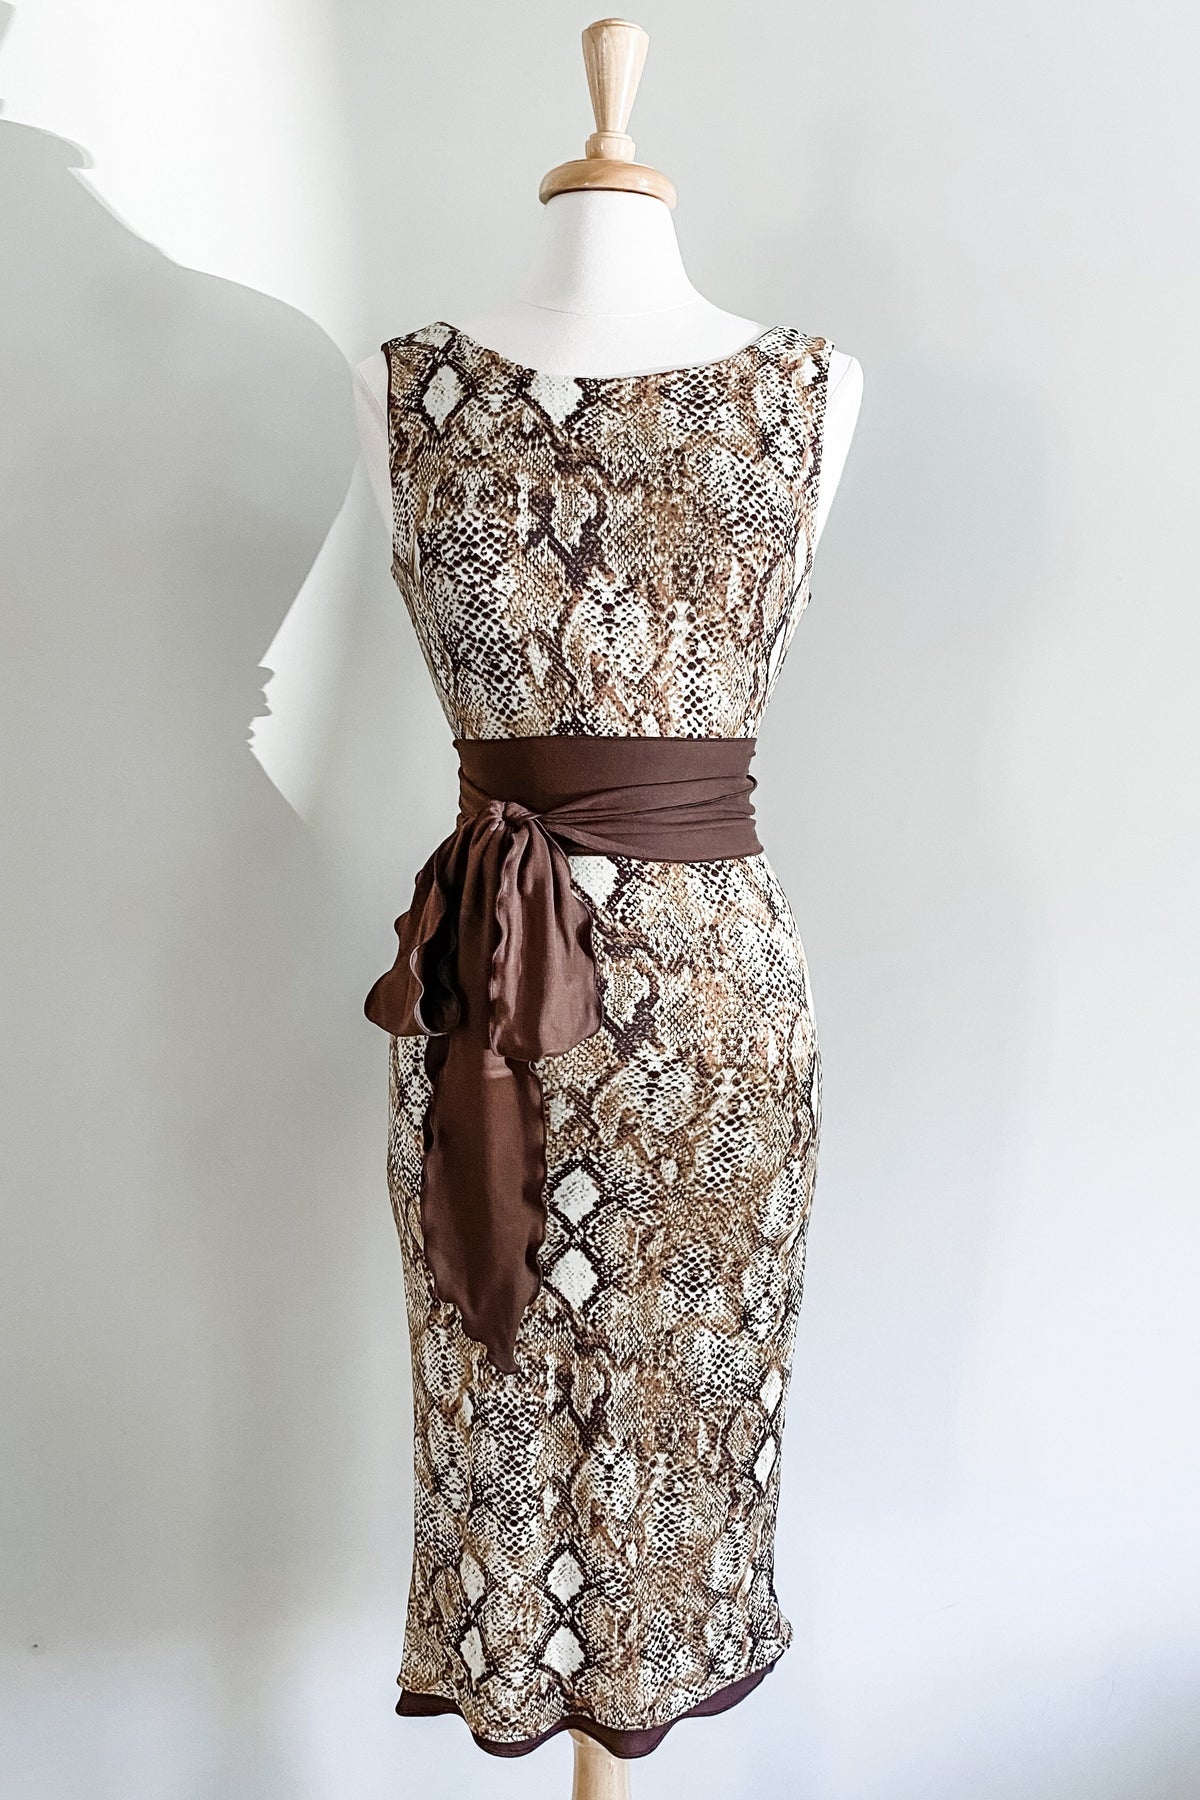 Diane Kroe Sheath Dress in Brown Snake Print